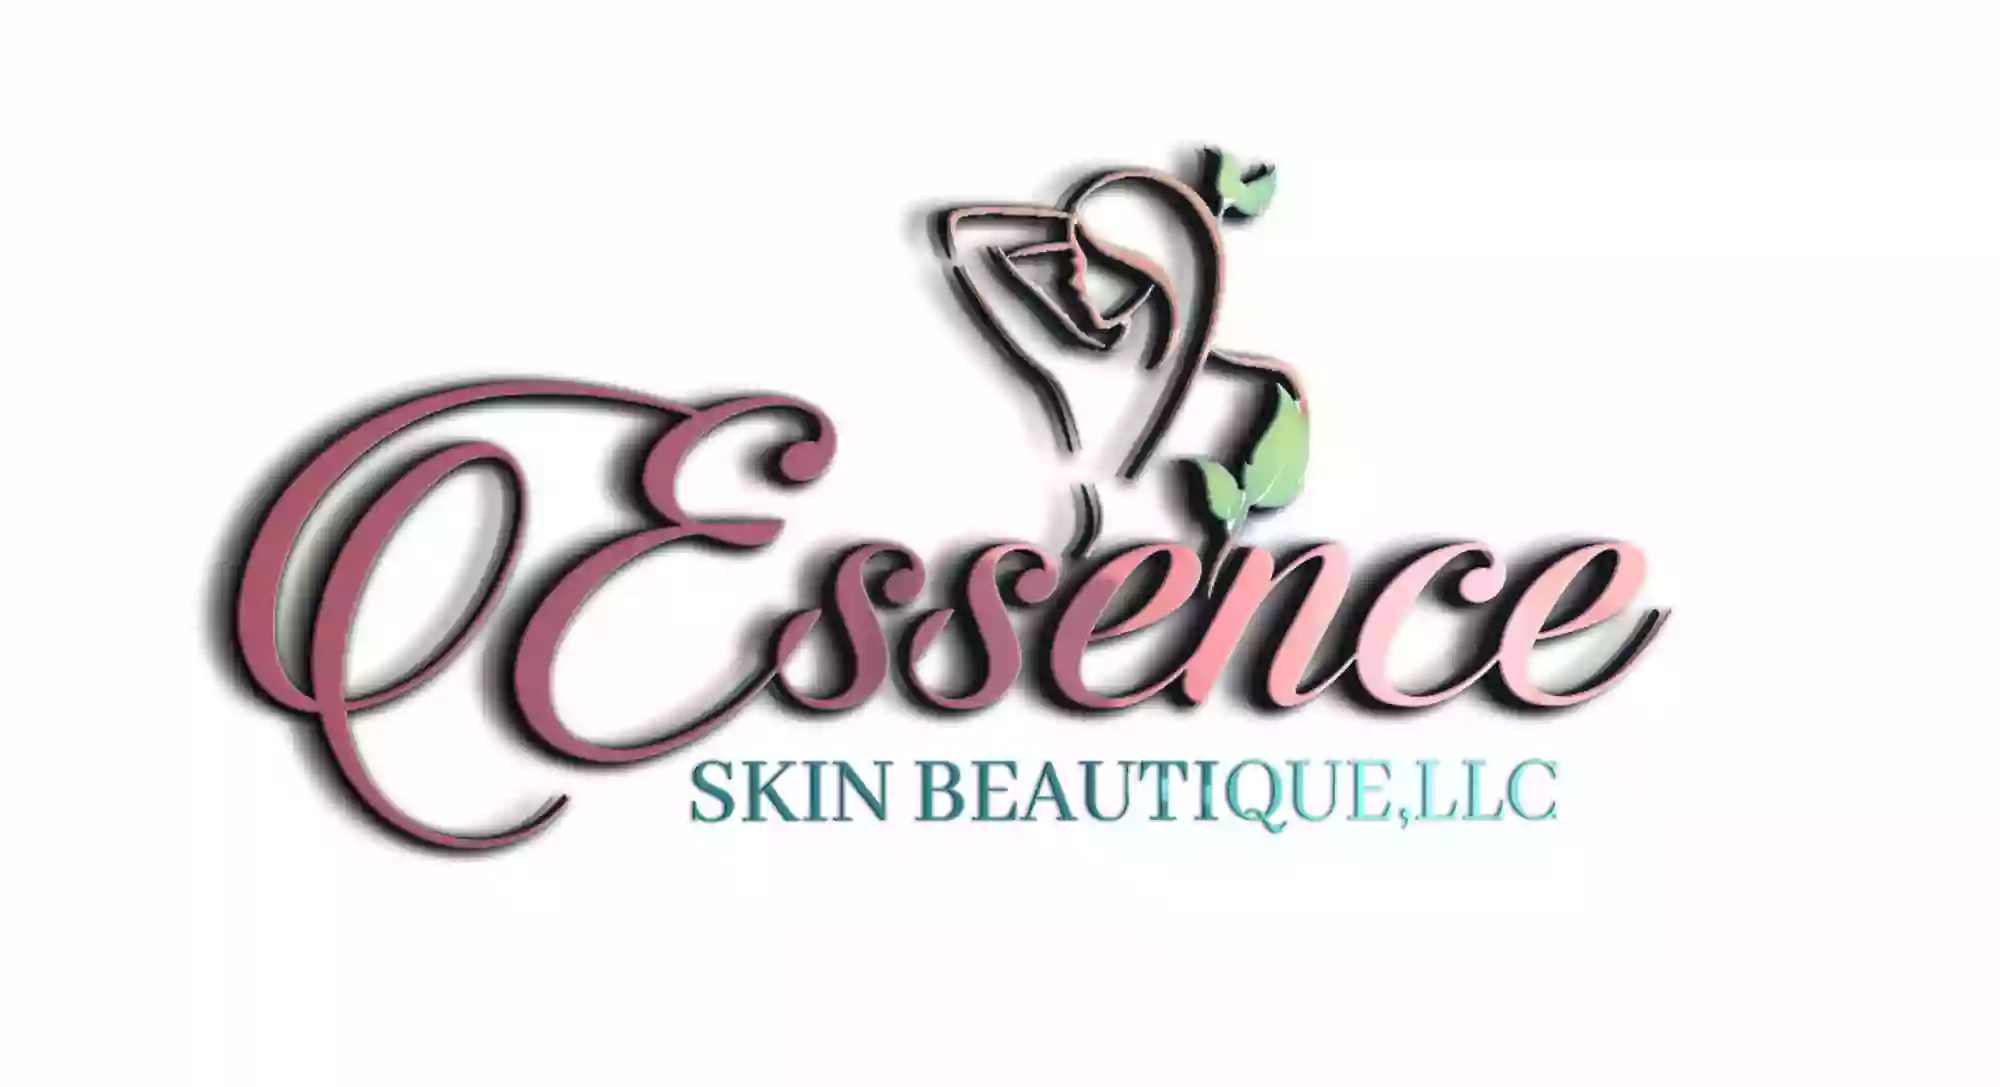 Essence Skin Beautique, LLC